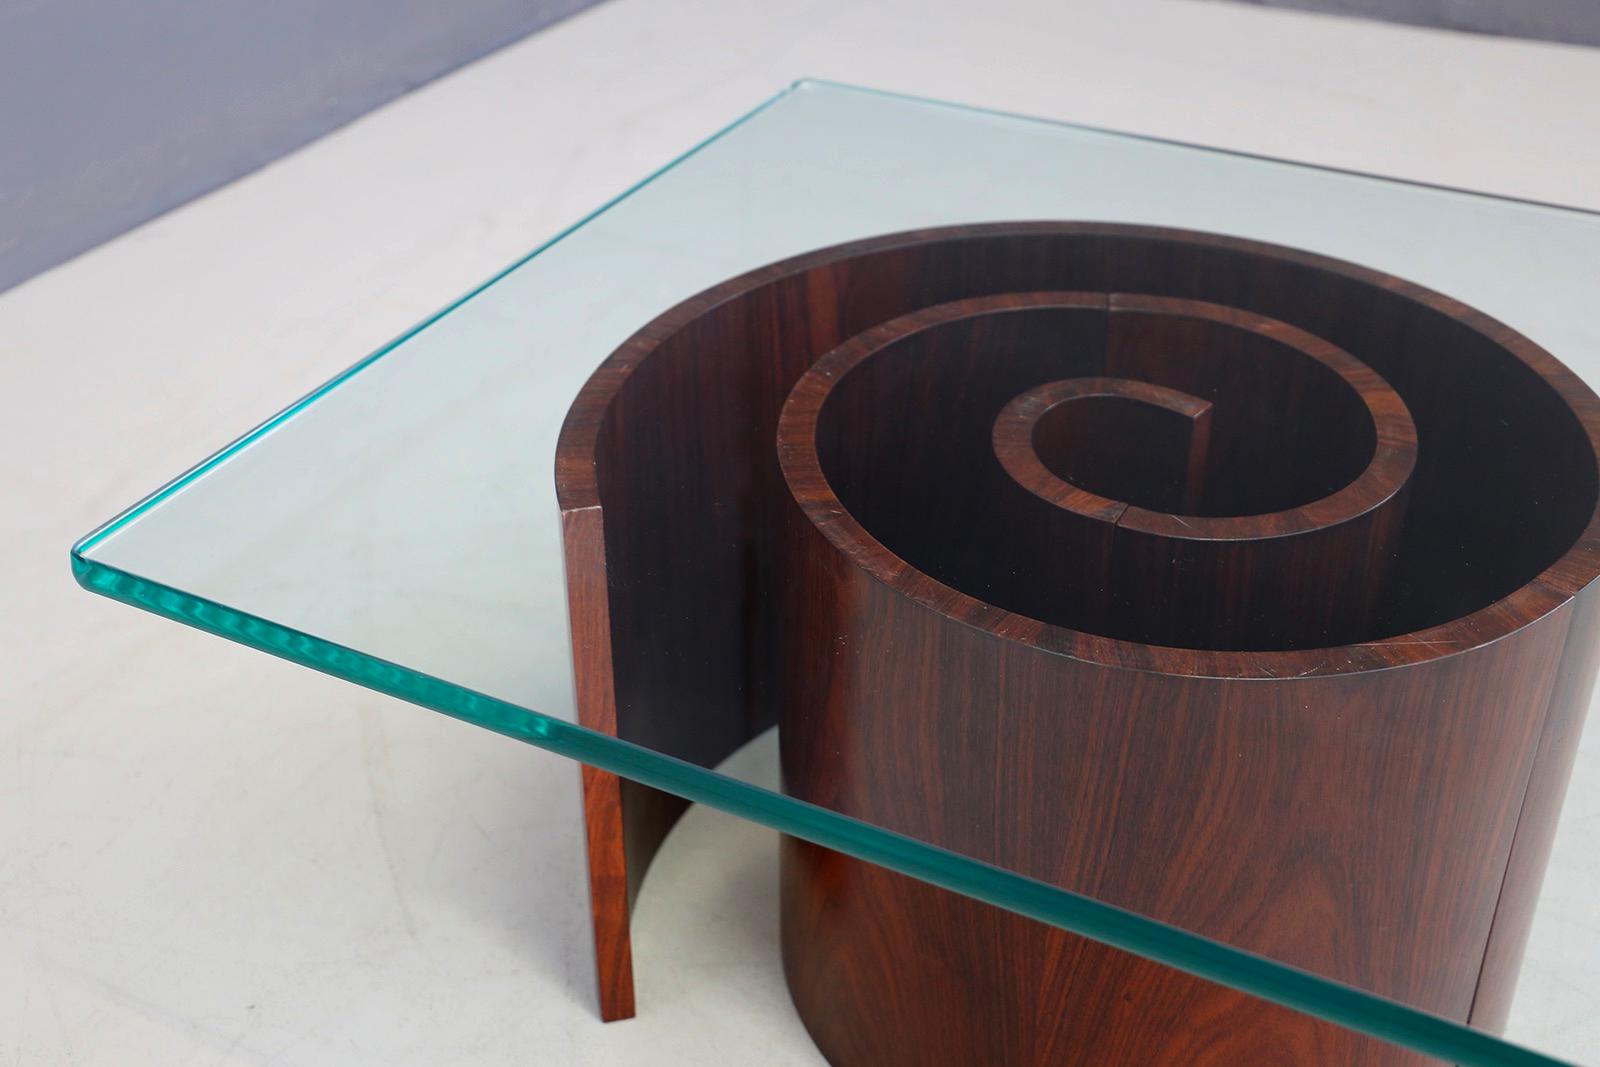 American Vladimir Kagan Snail Coffee Table, Spiral Base and Glass, 1960s